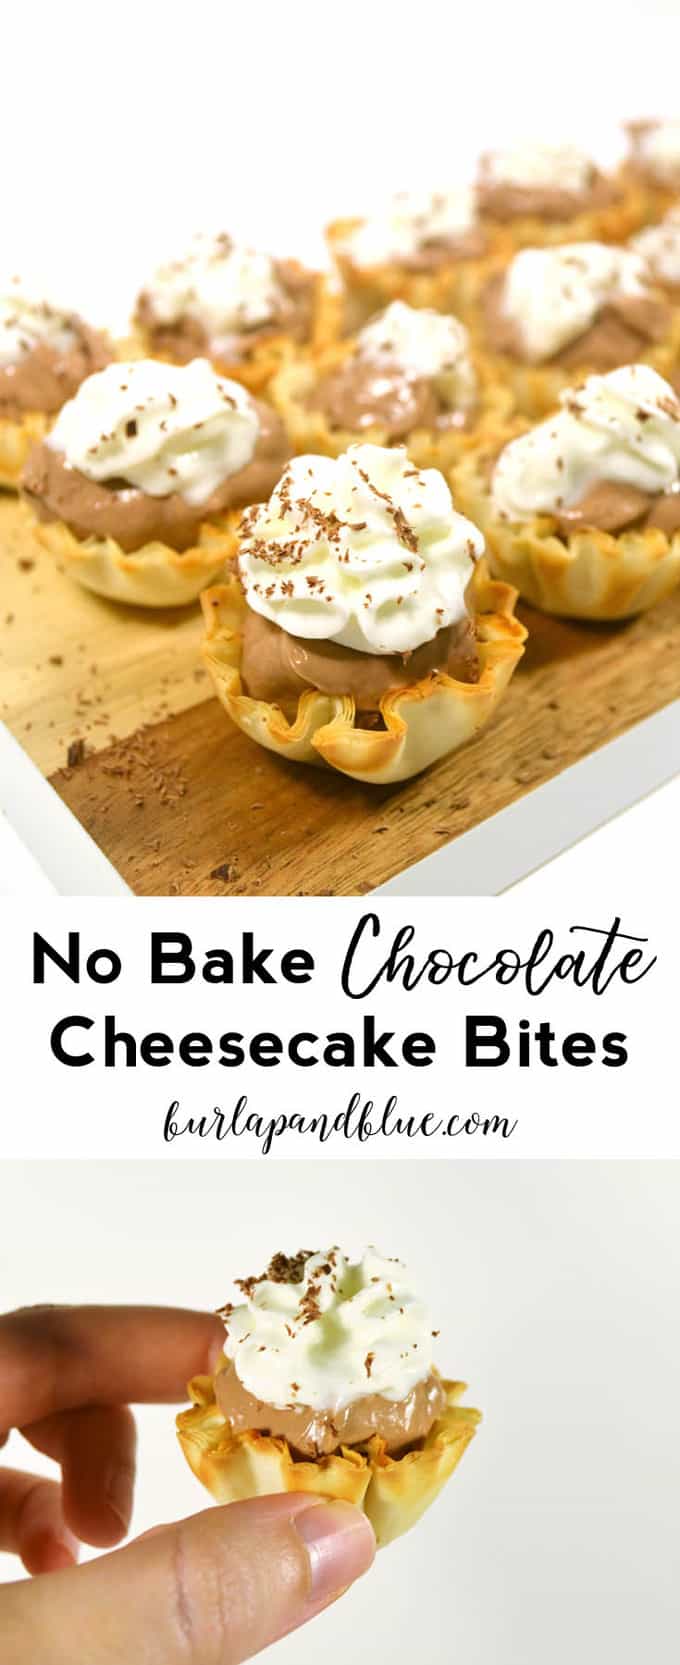 Mini Cheesecake Recipe {Make No Bake Chocolate Cheesecake Bites Recipe}